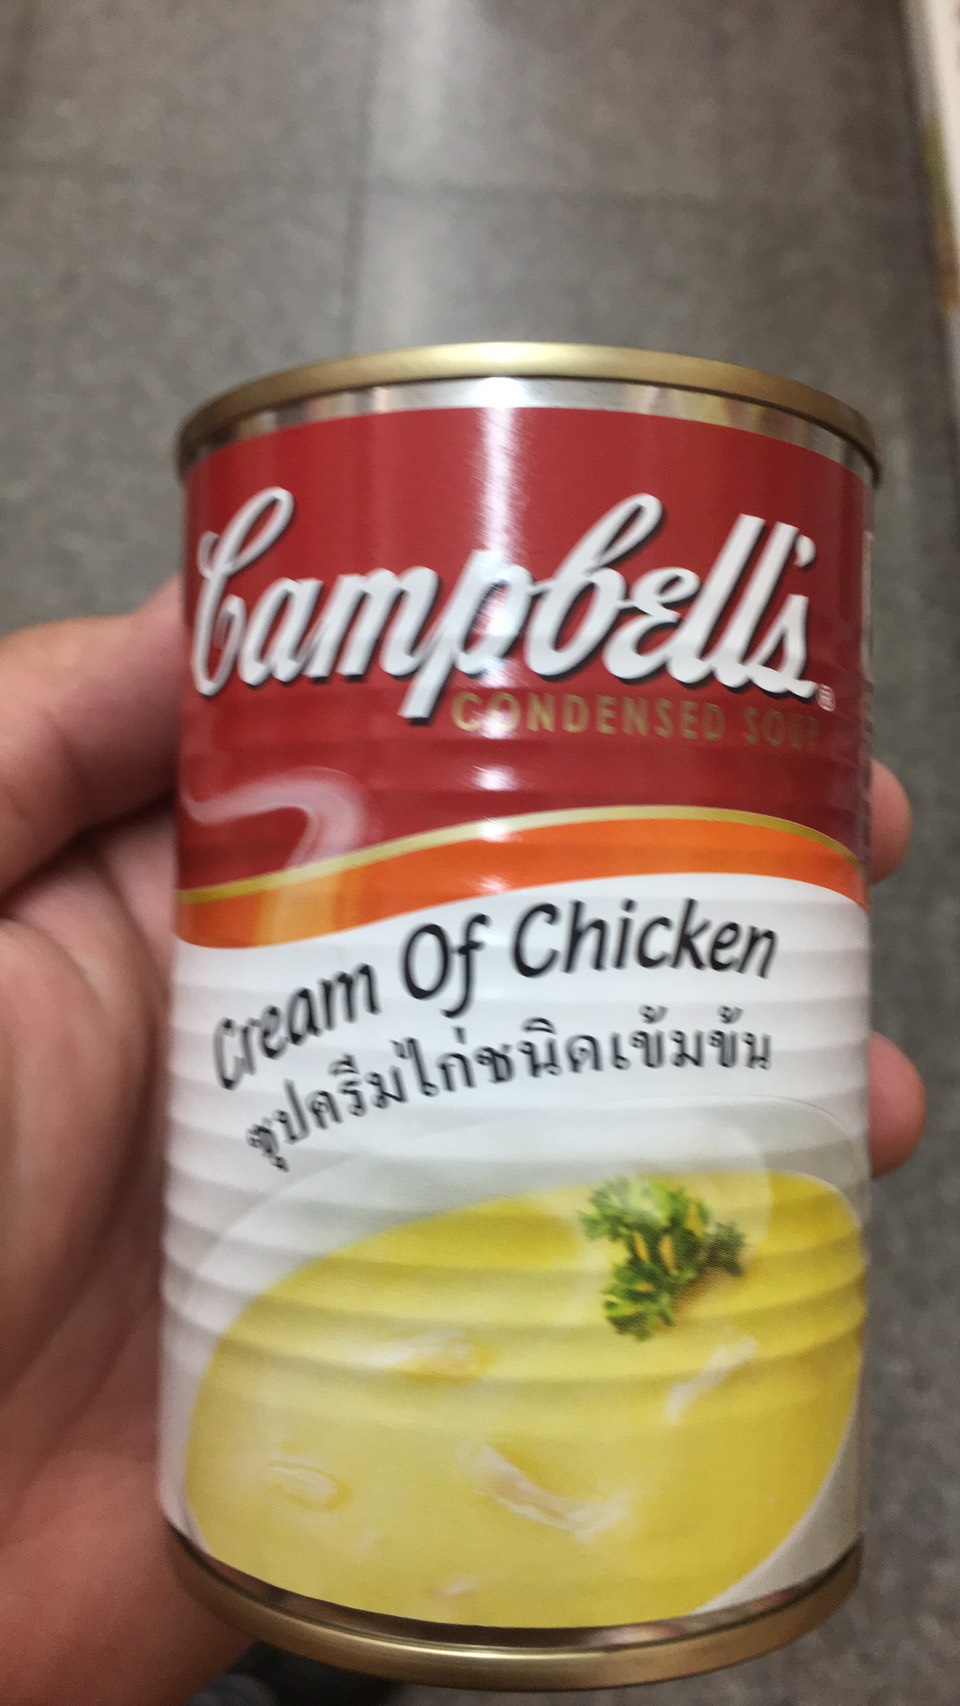 campbell's condensed soup cream of chicken แคมเบลล์ ซุปครีมไก่ชนิดเข้มข้น  กึ่งสำเร็จรูป